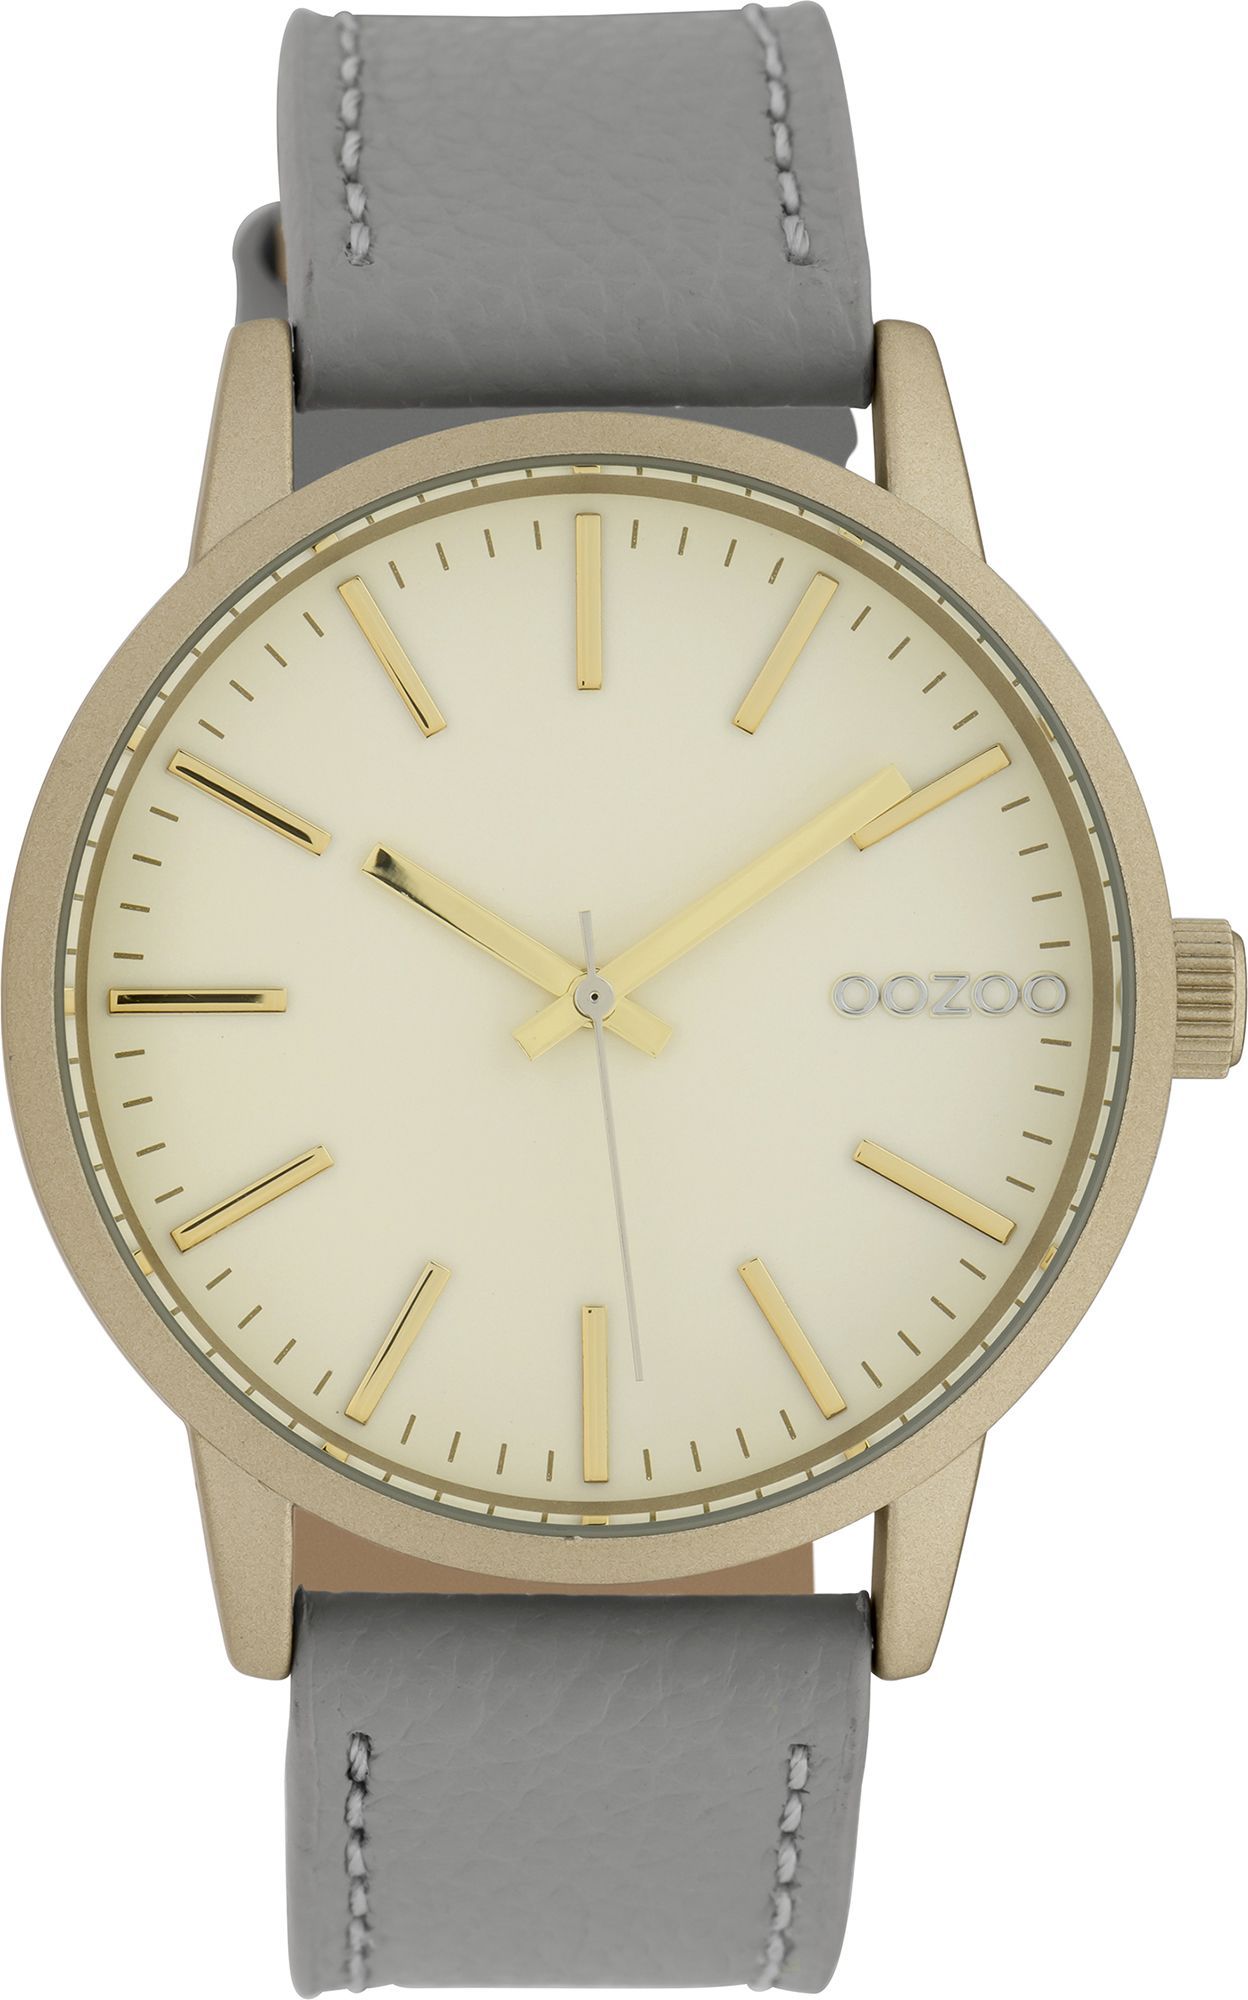 OOZOO TIMEPIECES C10016